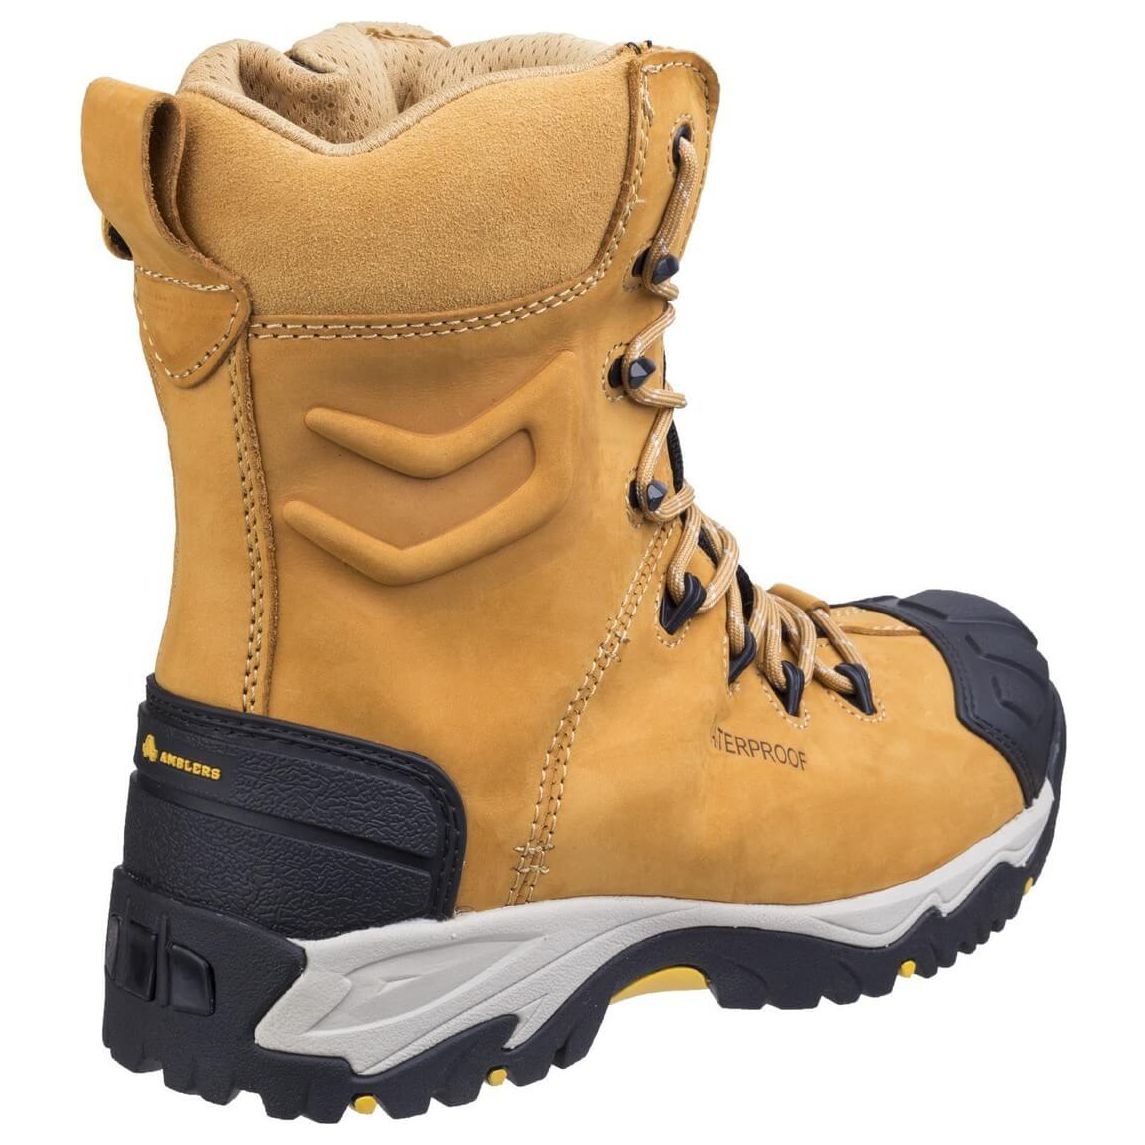 Amblers FS998 Waterproof Safety Boots-Honey-2